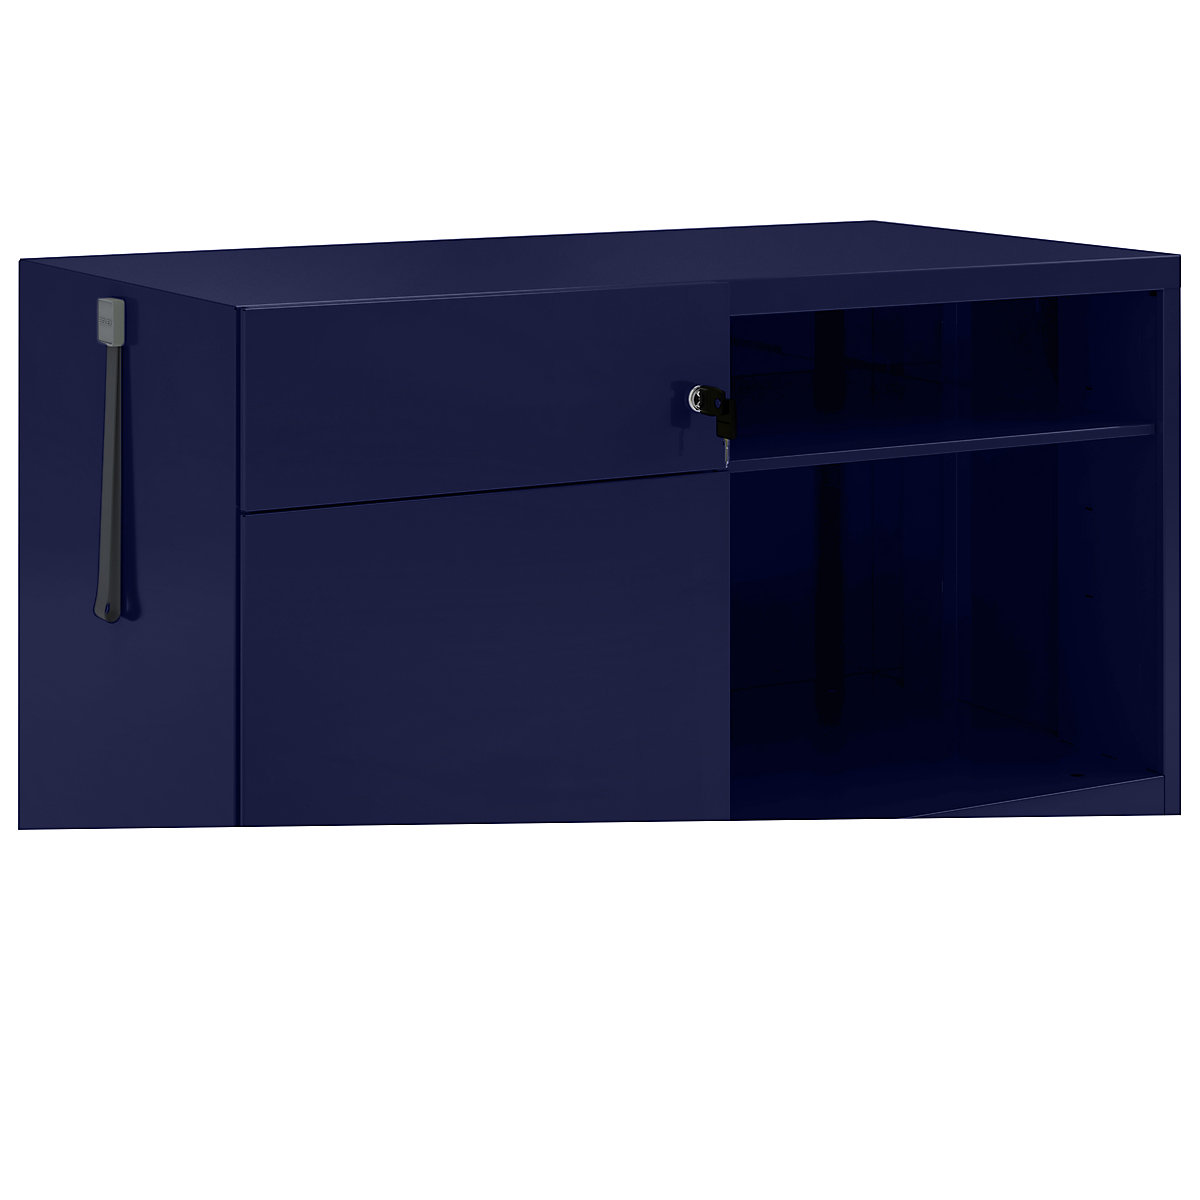 Note™ CADDY, î. x lăț. x ad. 563 x 900 x 490 mm – BISLEY, stânga 1 sertar universal și pentru registratură suspendată, albastru oxford